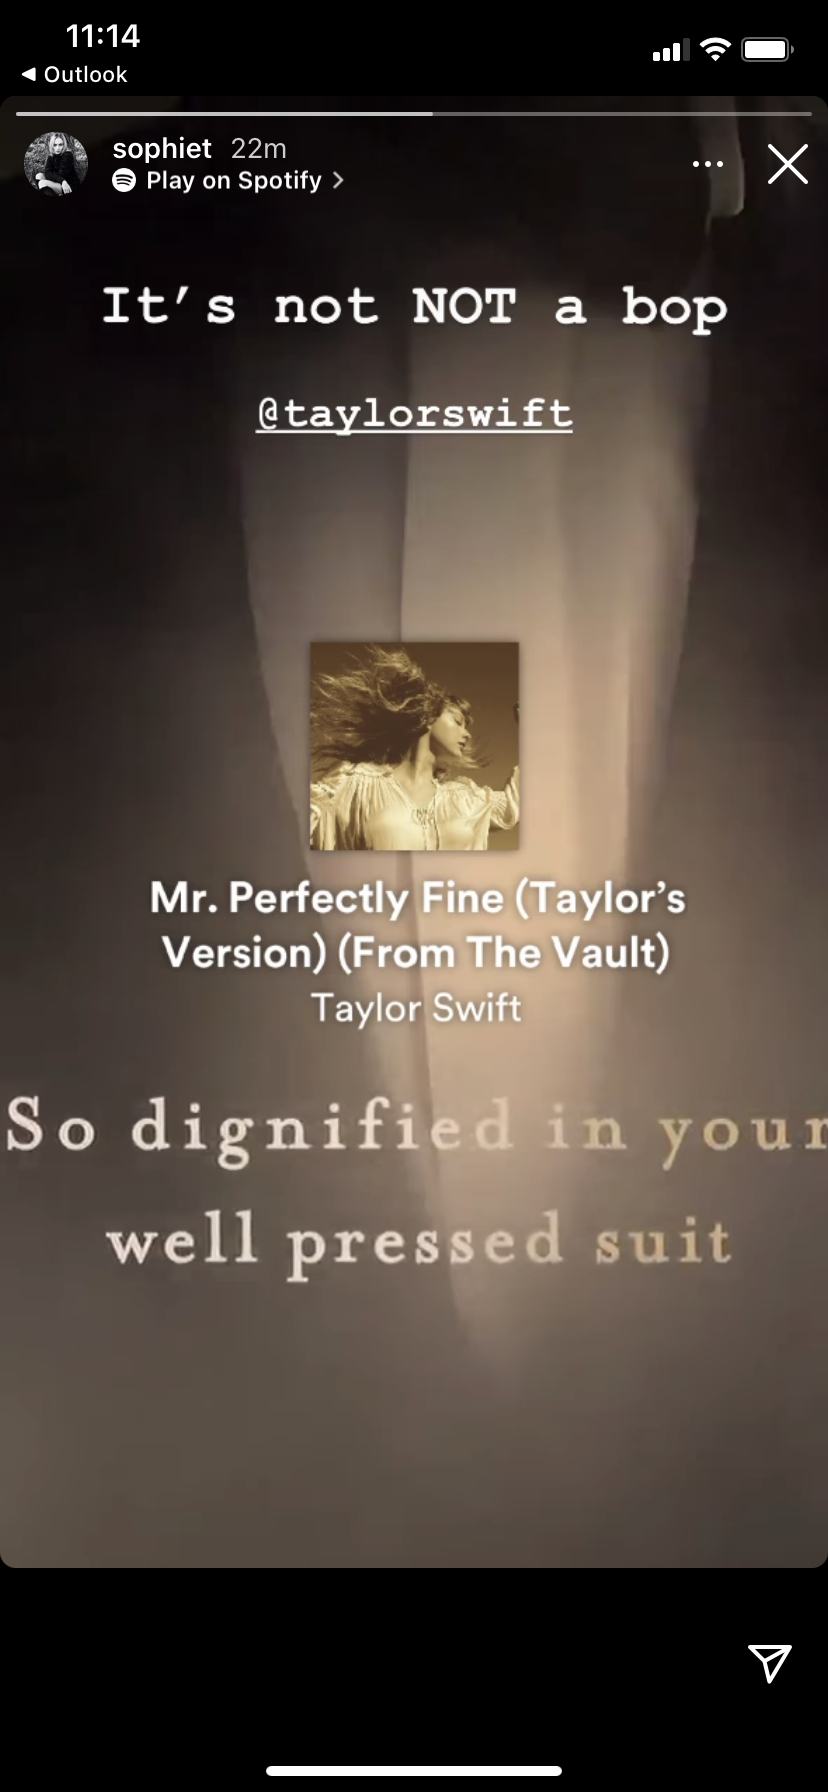 Mr. Perfectly Fine - Wikipedia